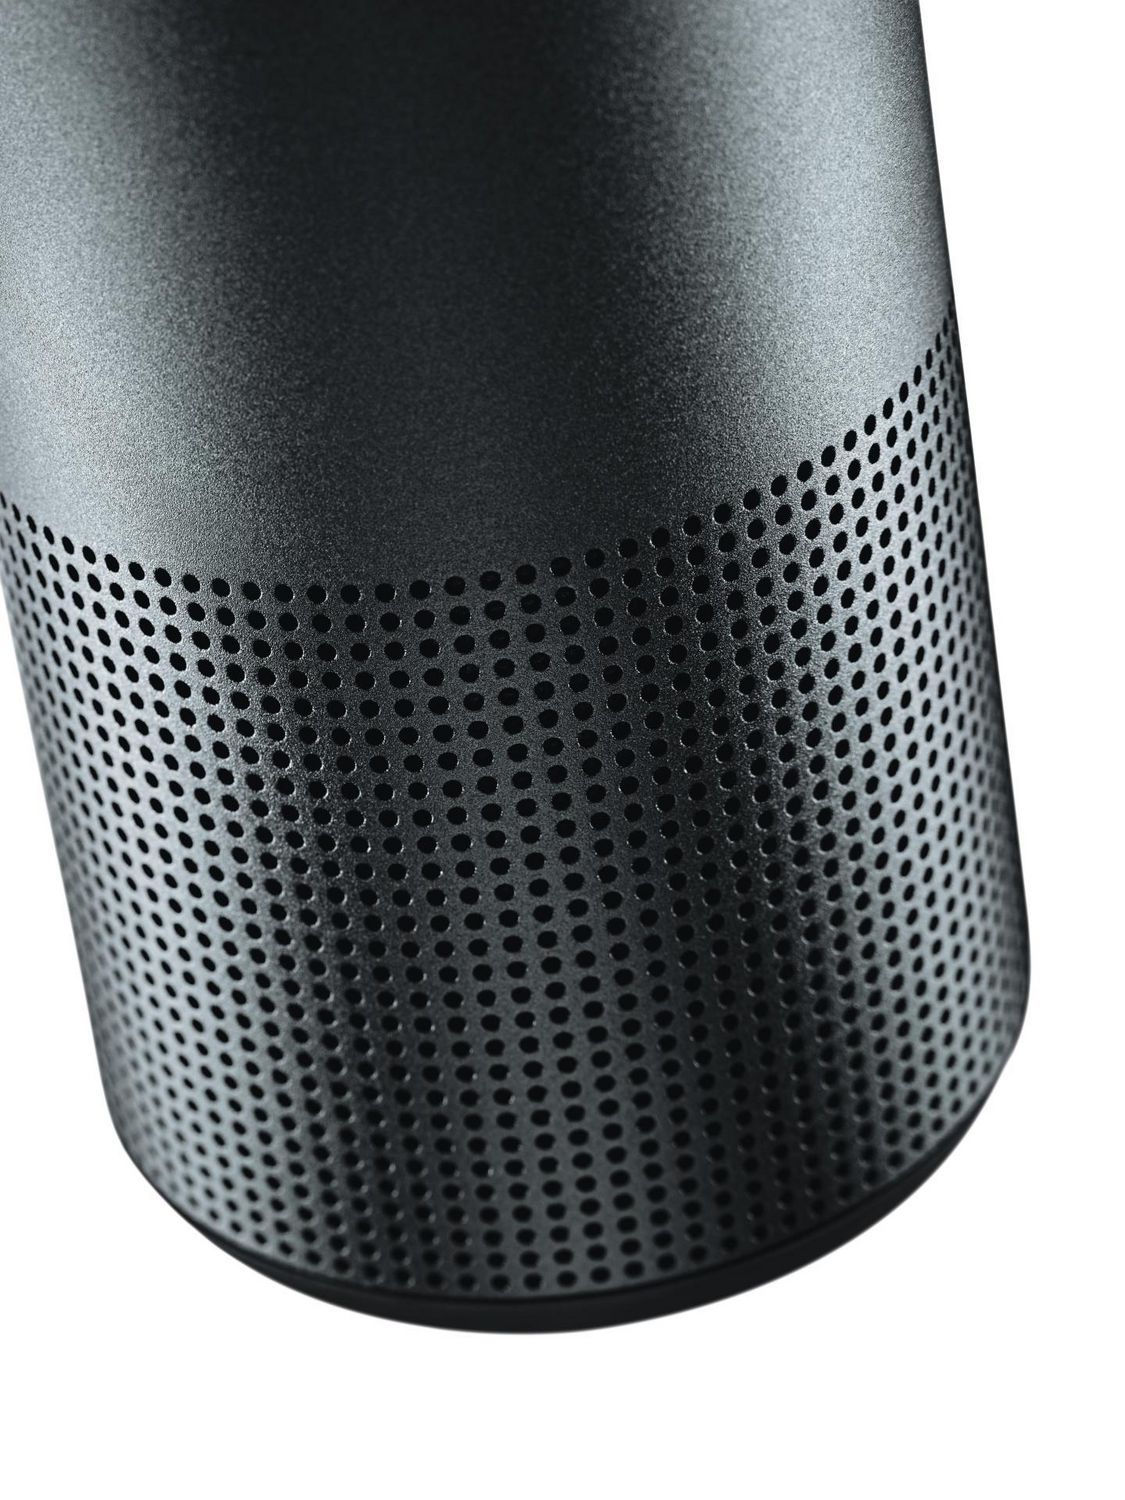 Bose SoundLink Revolve Bluetooth® Speaker - Walmart.ca